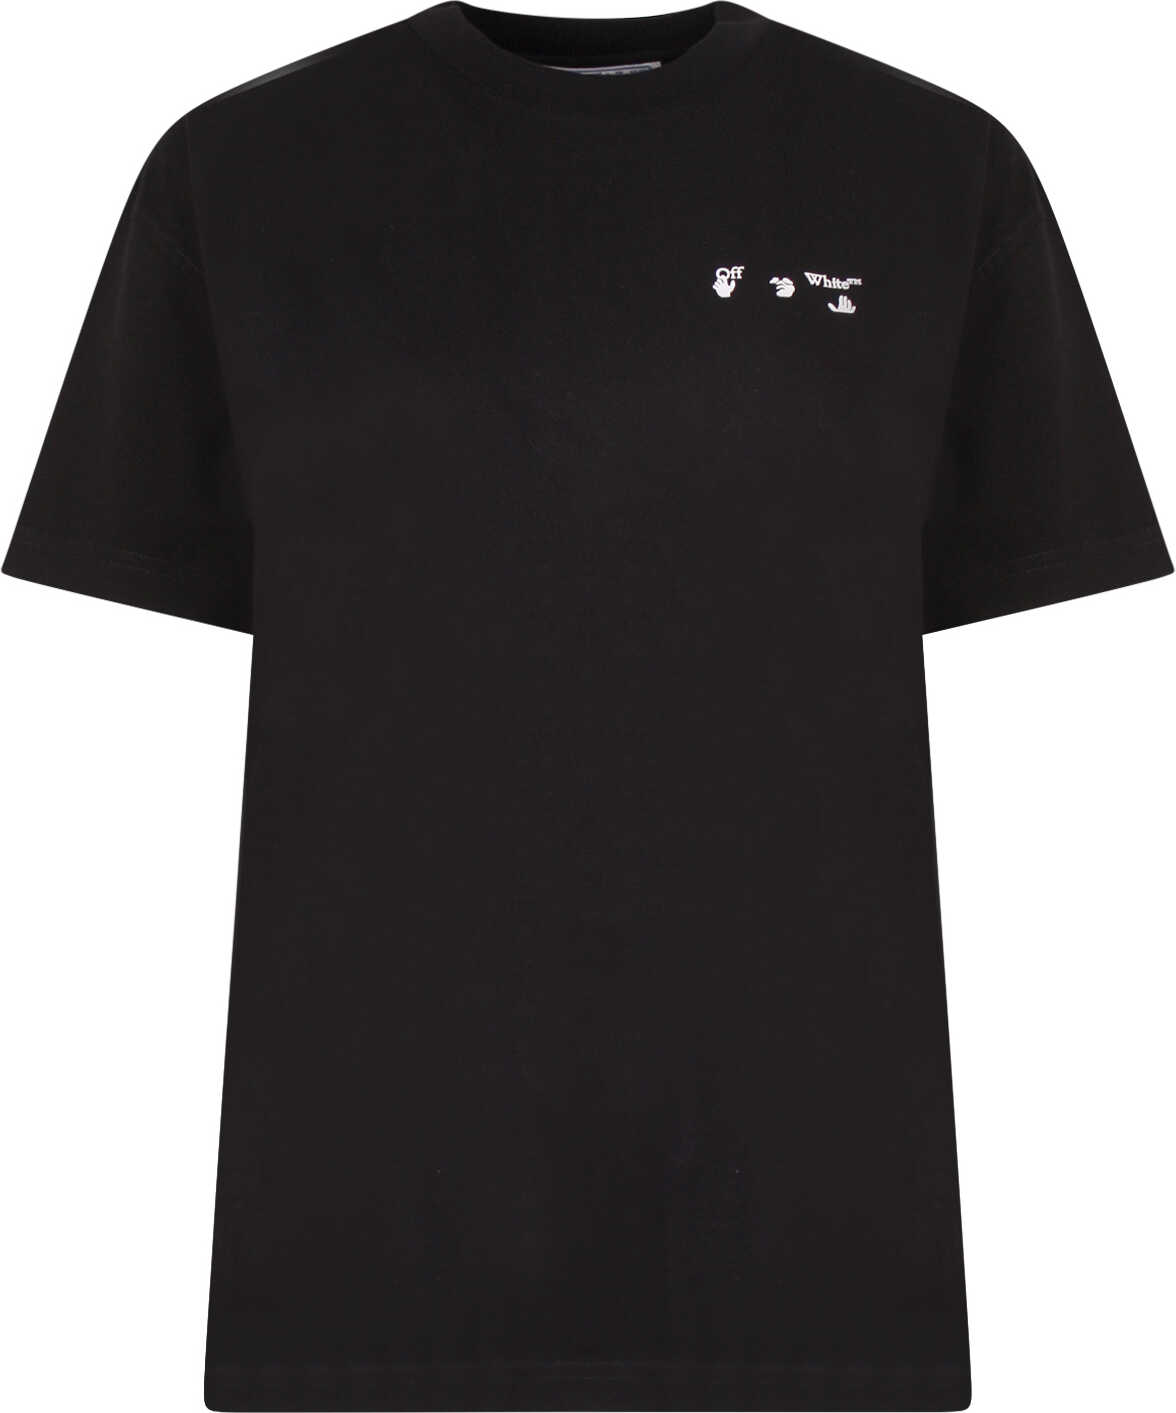 Off-White T-Shirt Black image